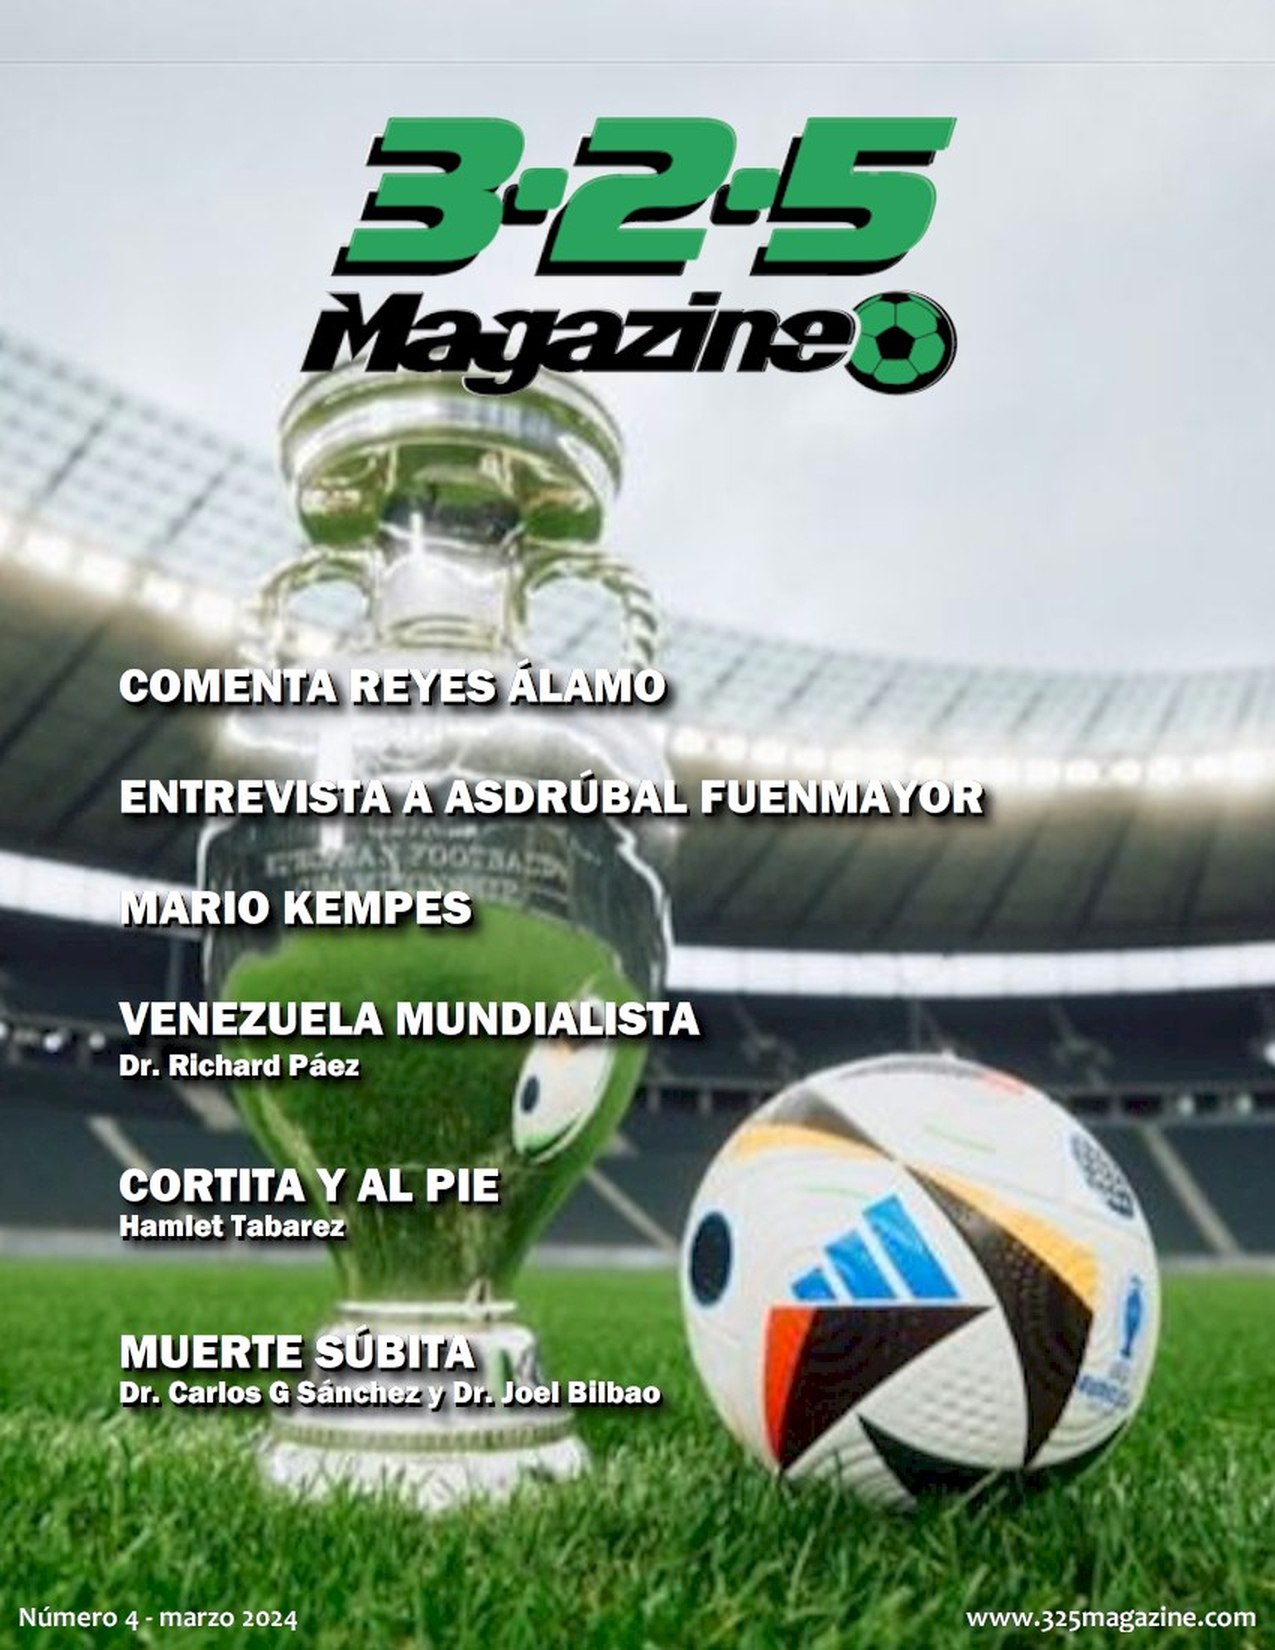 325 Magazine Portada Nro 4